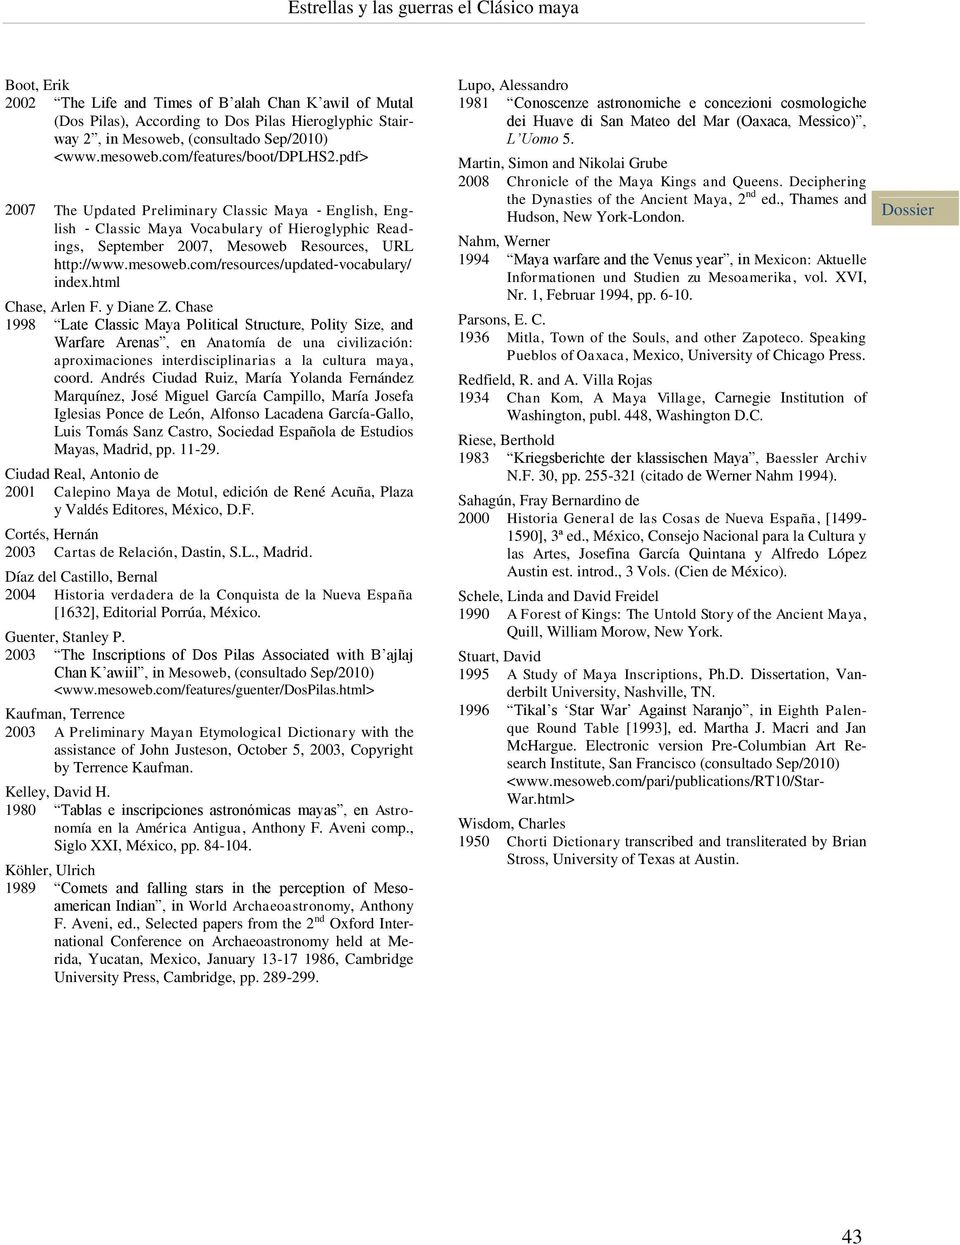 pdf> 2007 The Updated Preliminary Classic Maya English, English Classic Maya Vocabulary of Hieroglyphic Readings, September 2007, Mesoweb Resources, URL http://www.mesoweb.